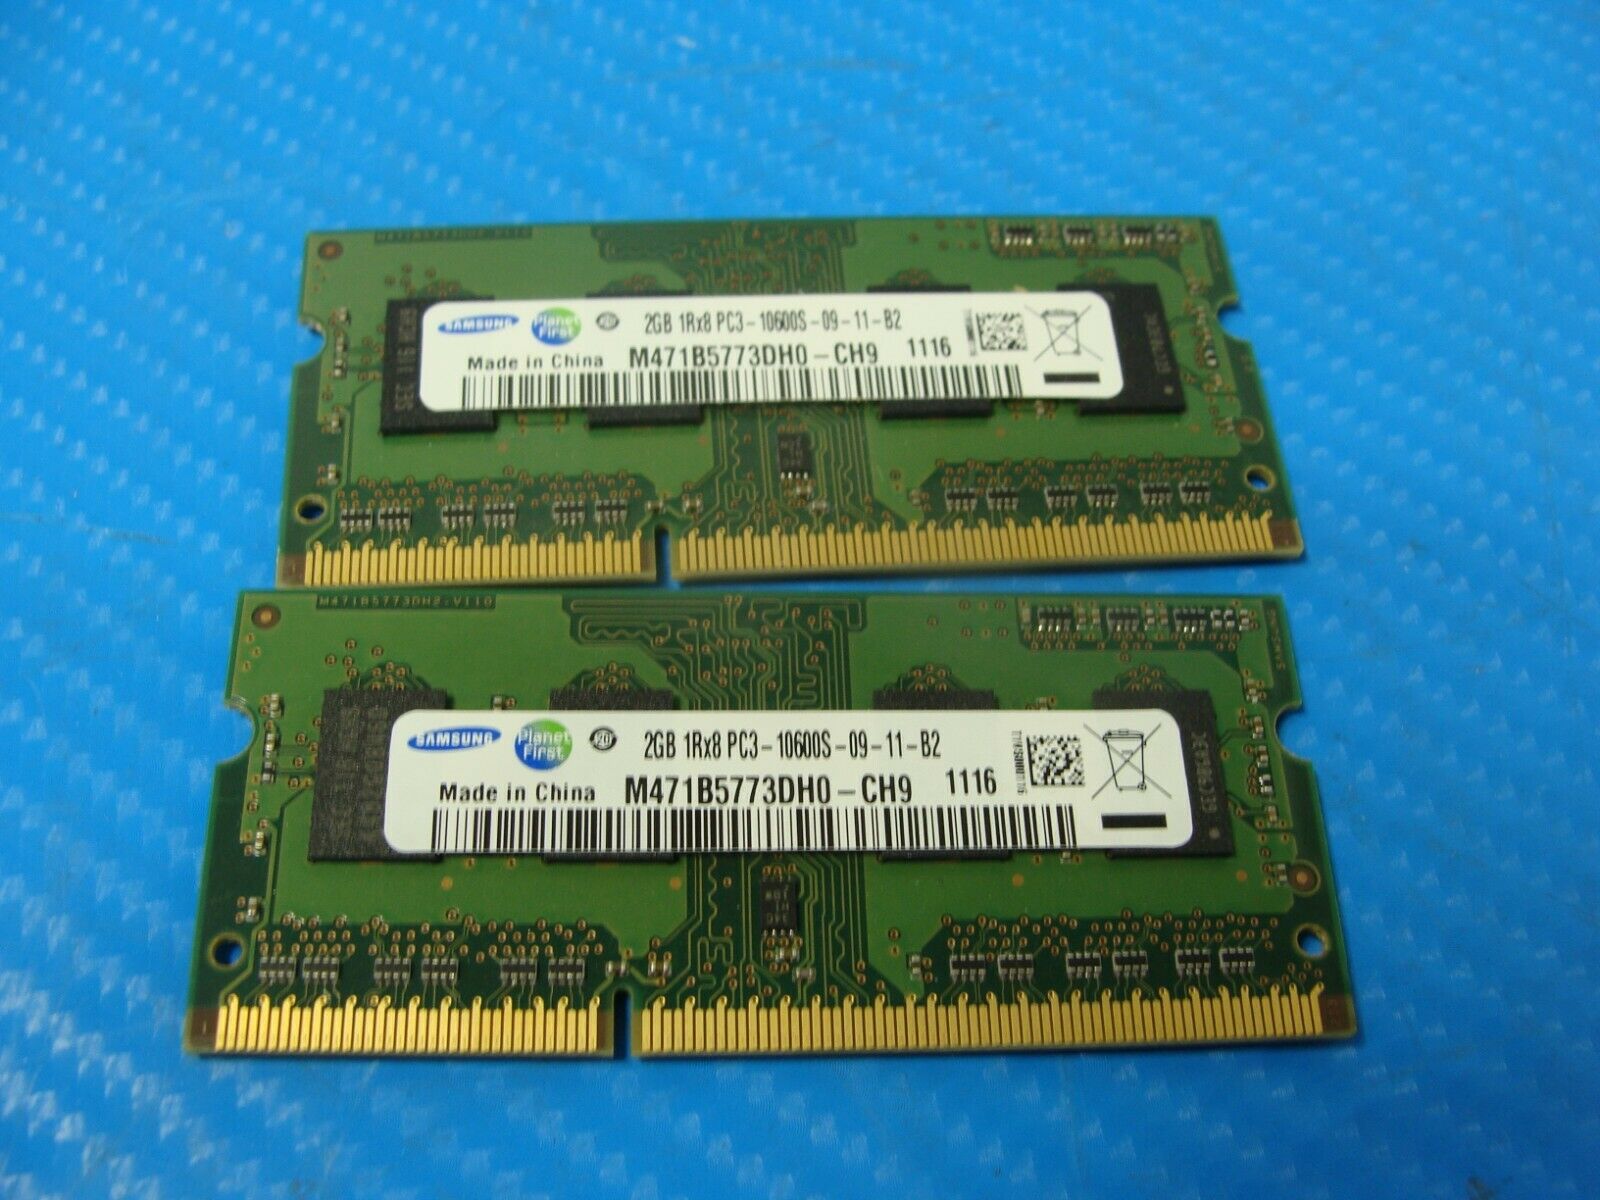 Apple A1278 Samsung 4GB (2x2GB) PC3-10600S SO-DIMM RAM Memory M471B5773DH0-CH9 Samsung